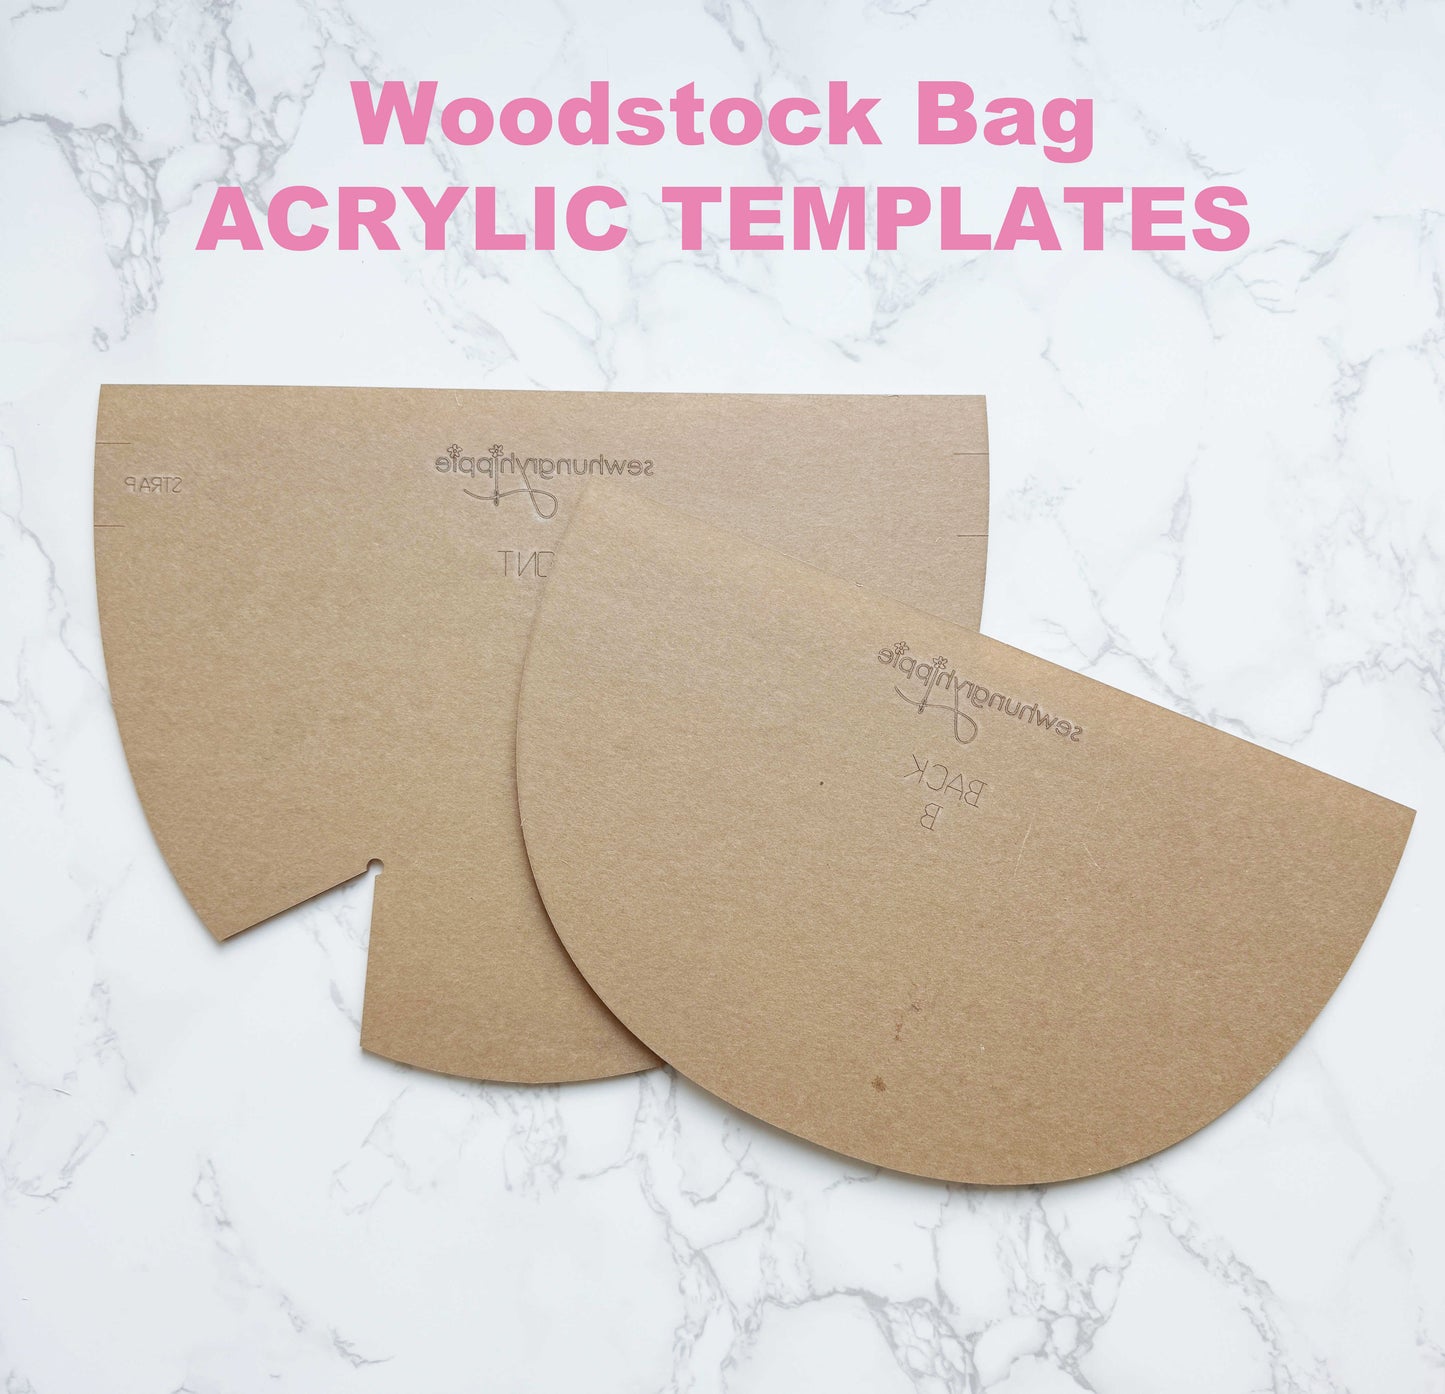 Woodstock Bag acrylic templates